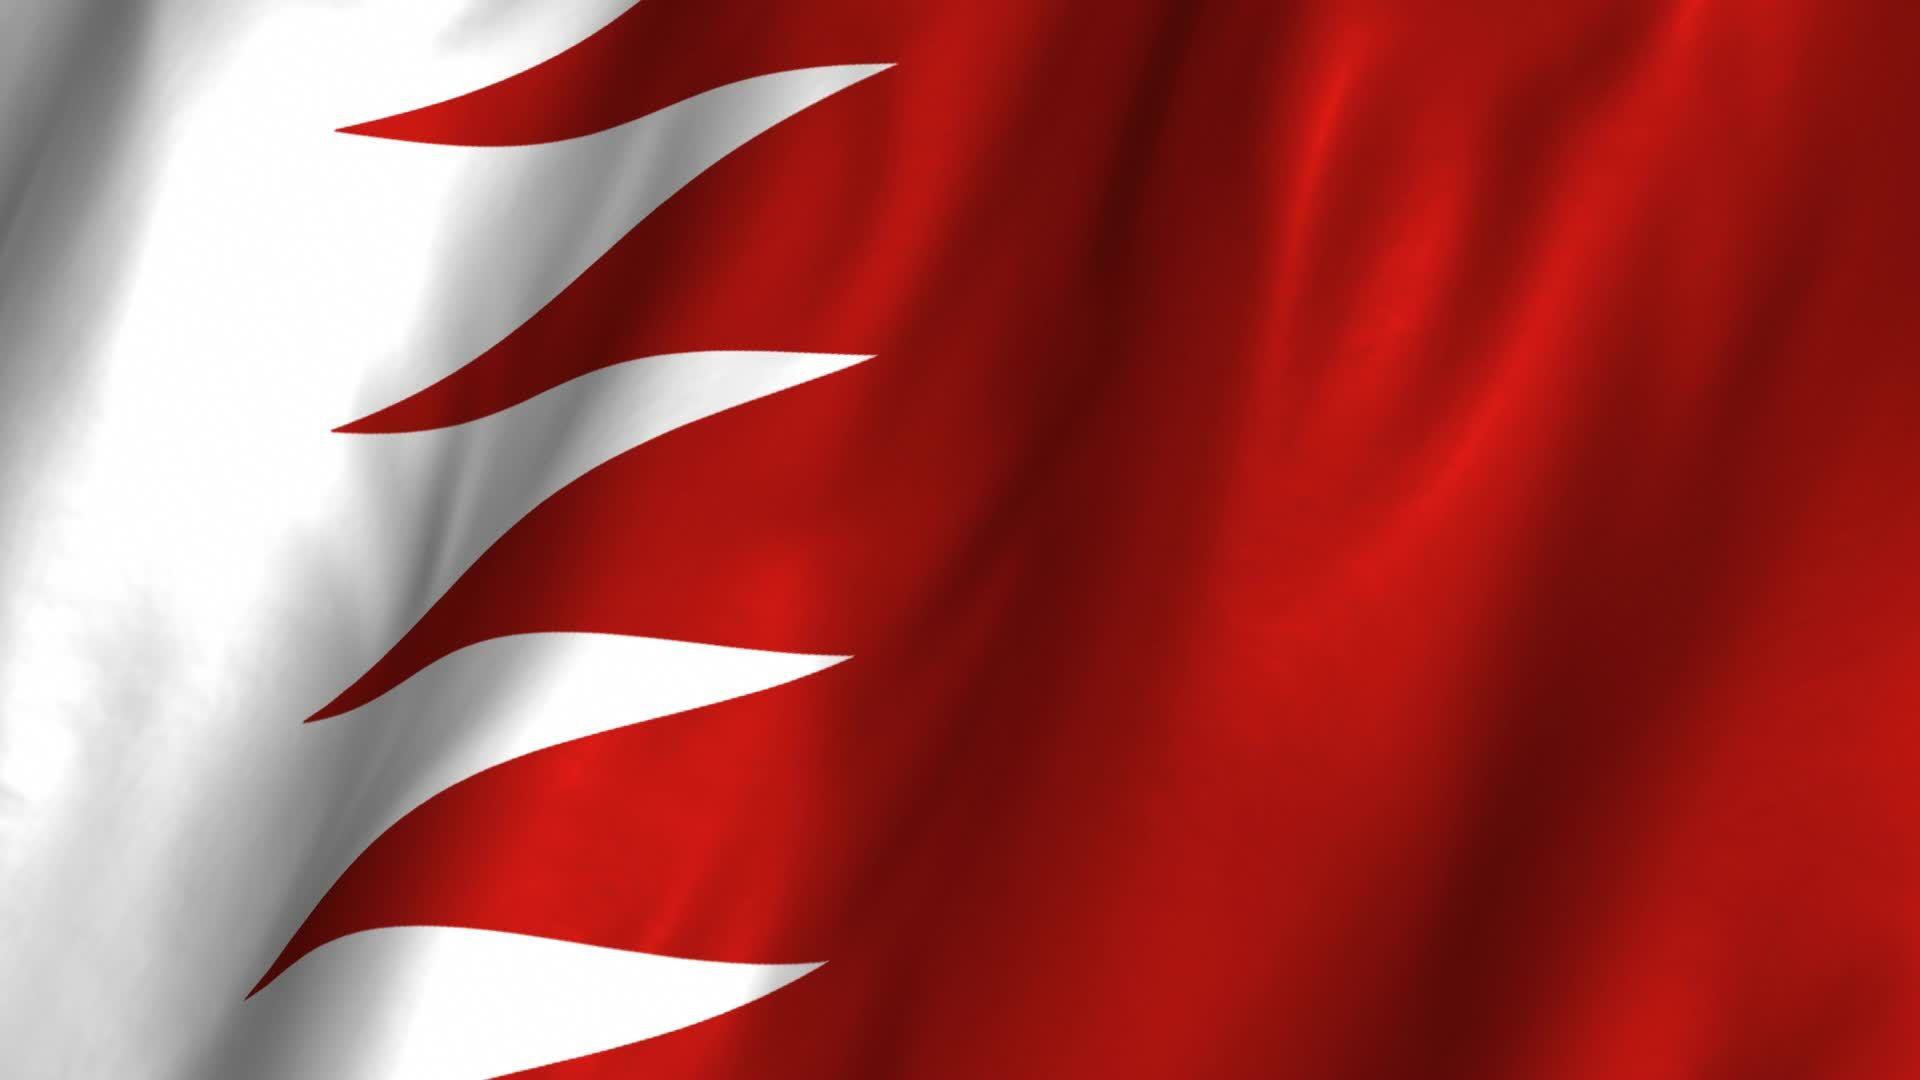 Bahrain Flag Wallpaper. Bahrain. Saudi Arabia, Iran